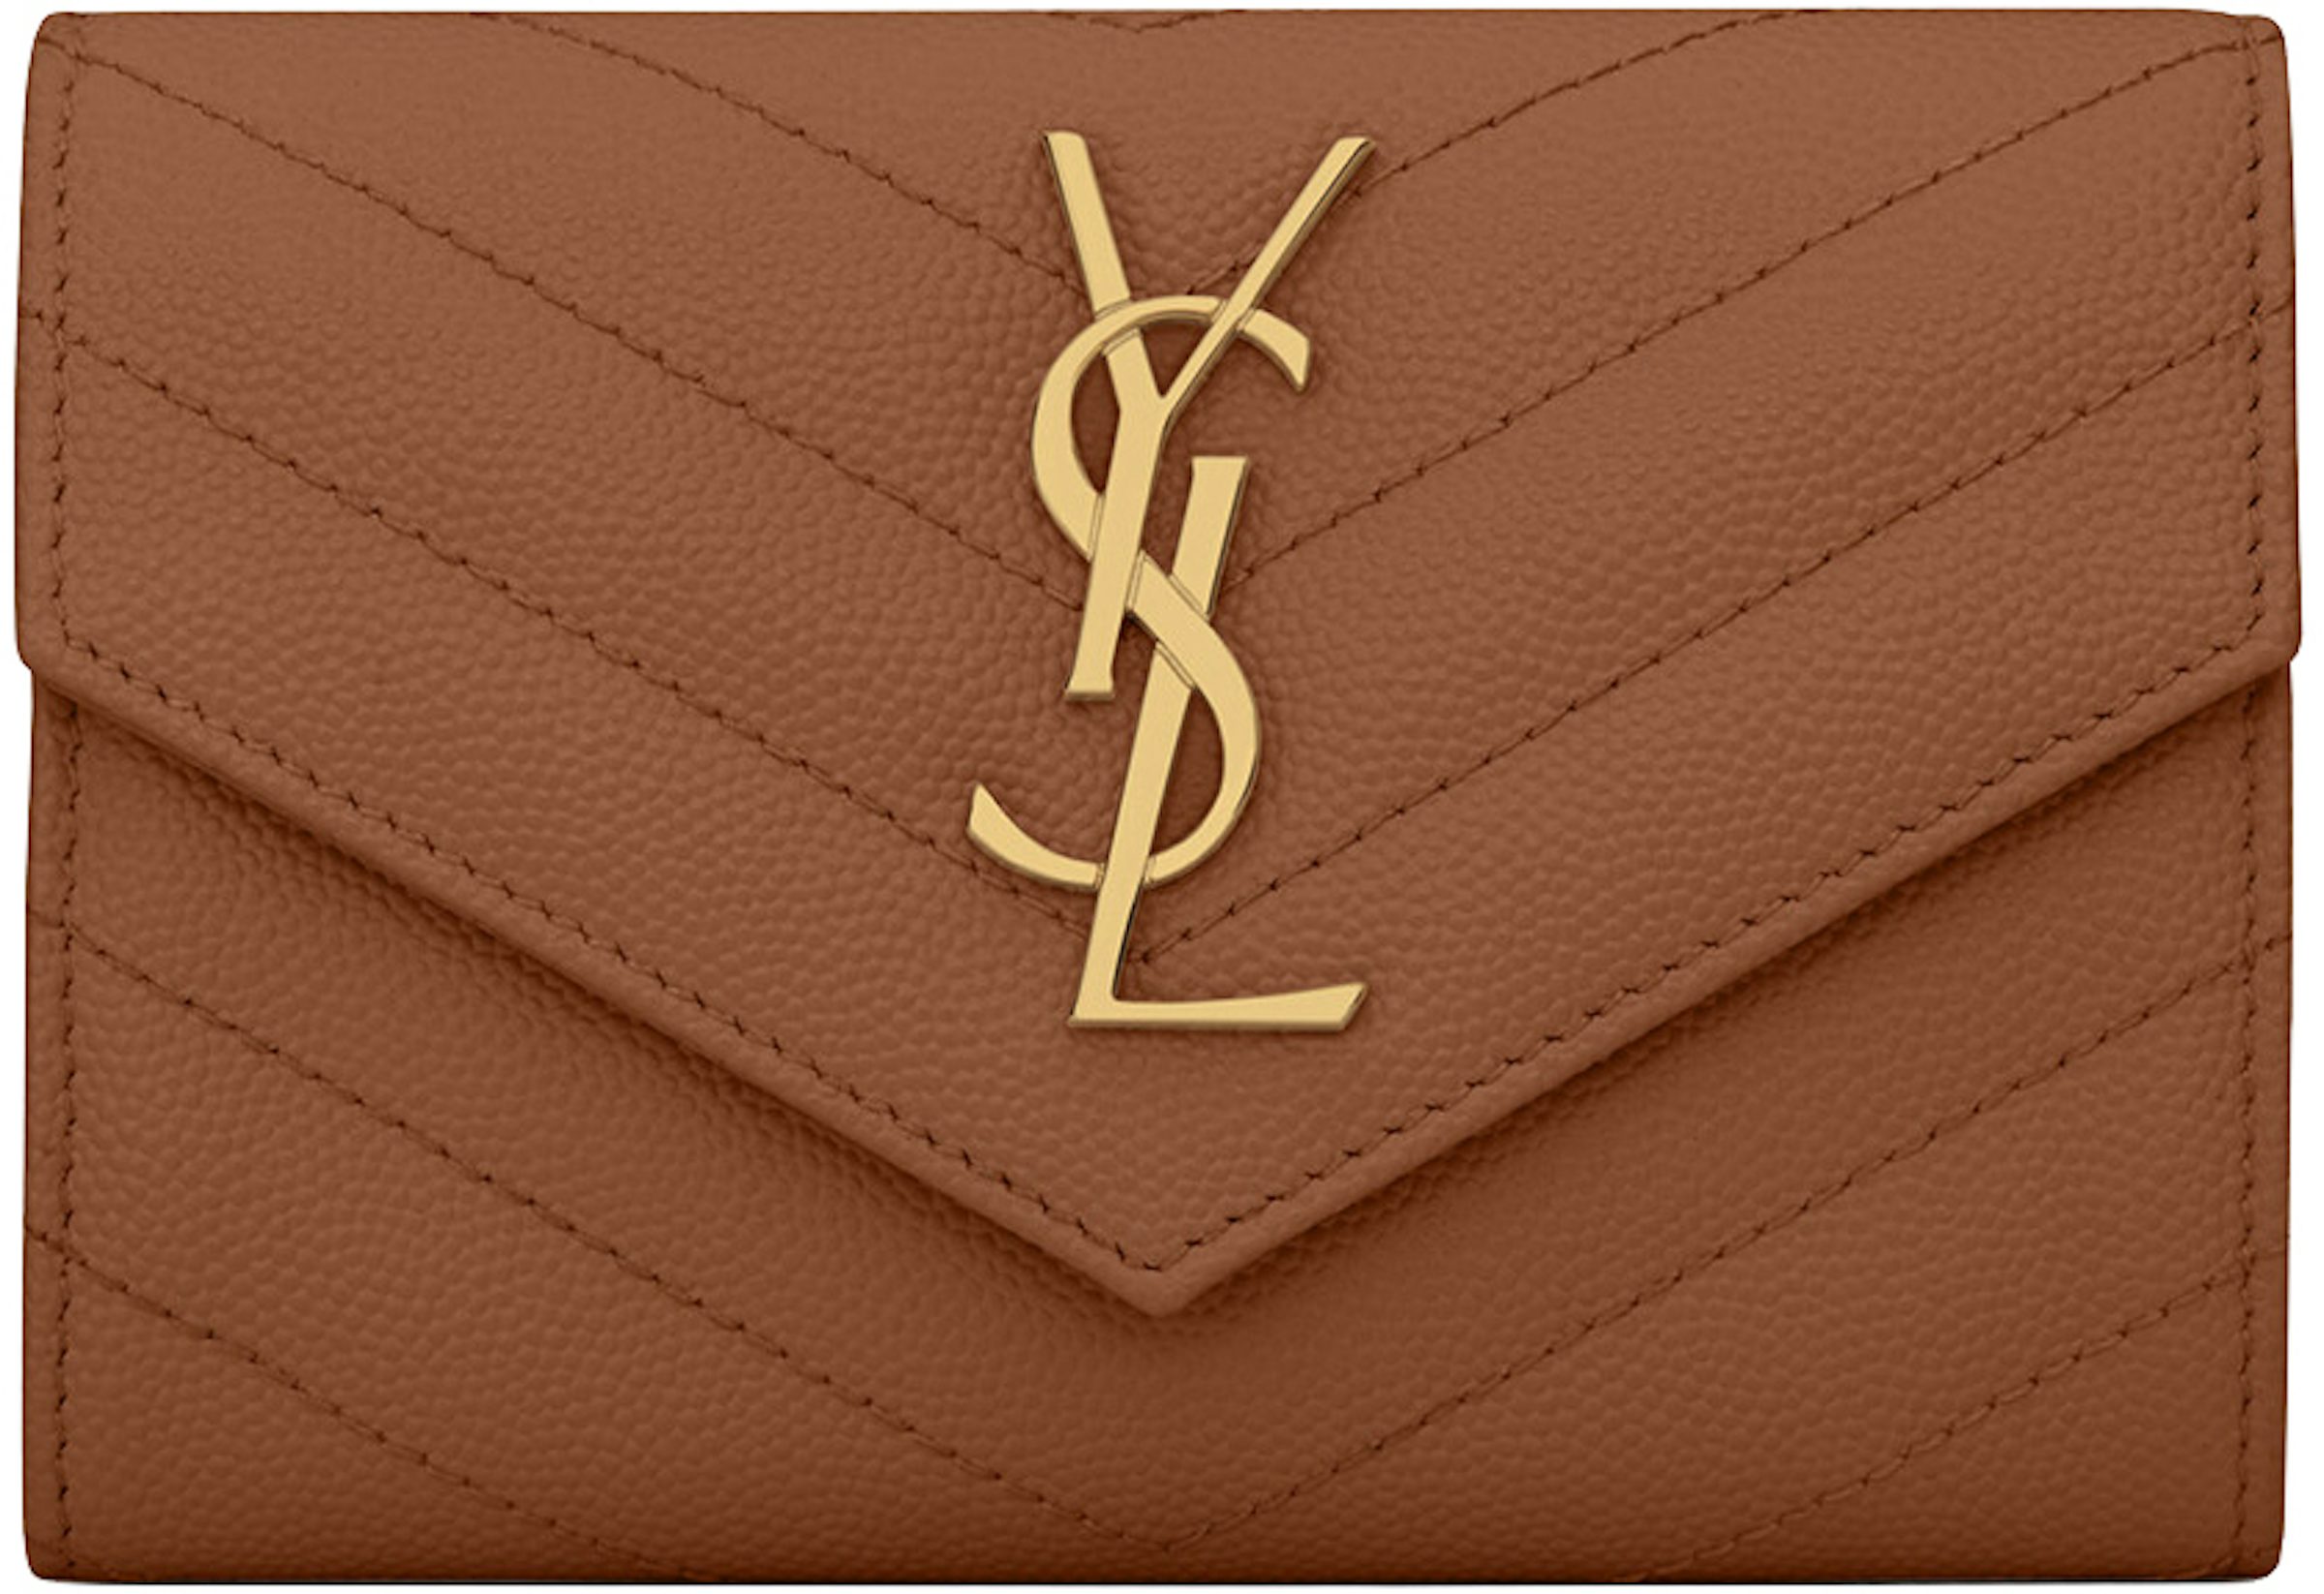 Saint Laurent Small Ysl Envelope Flap Wallet on Chain Black